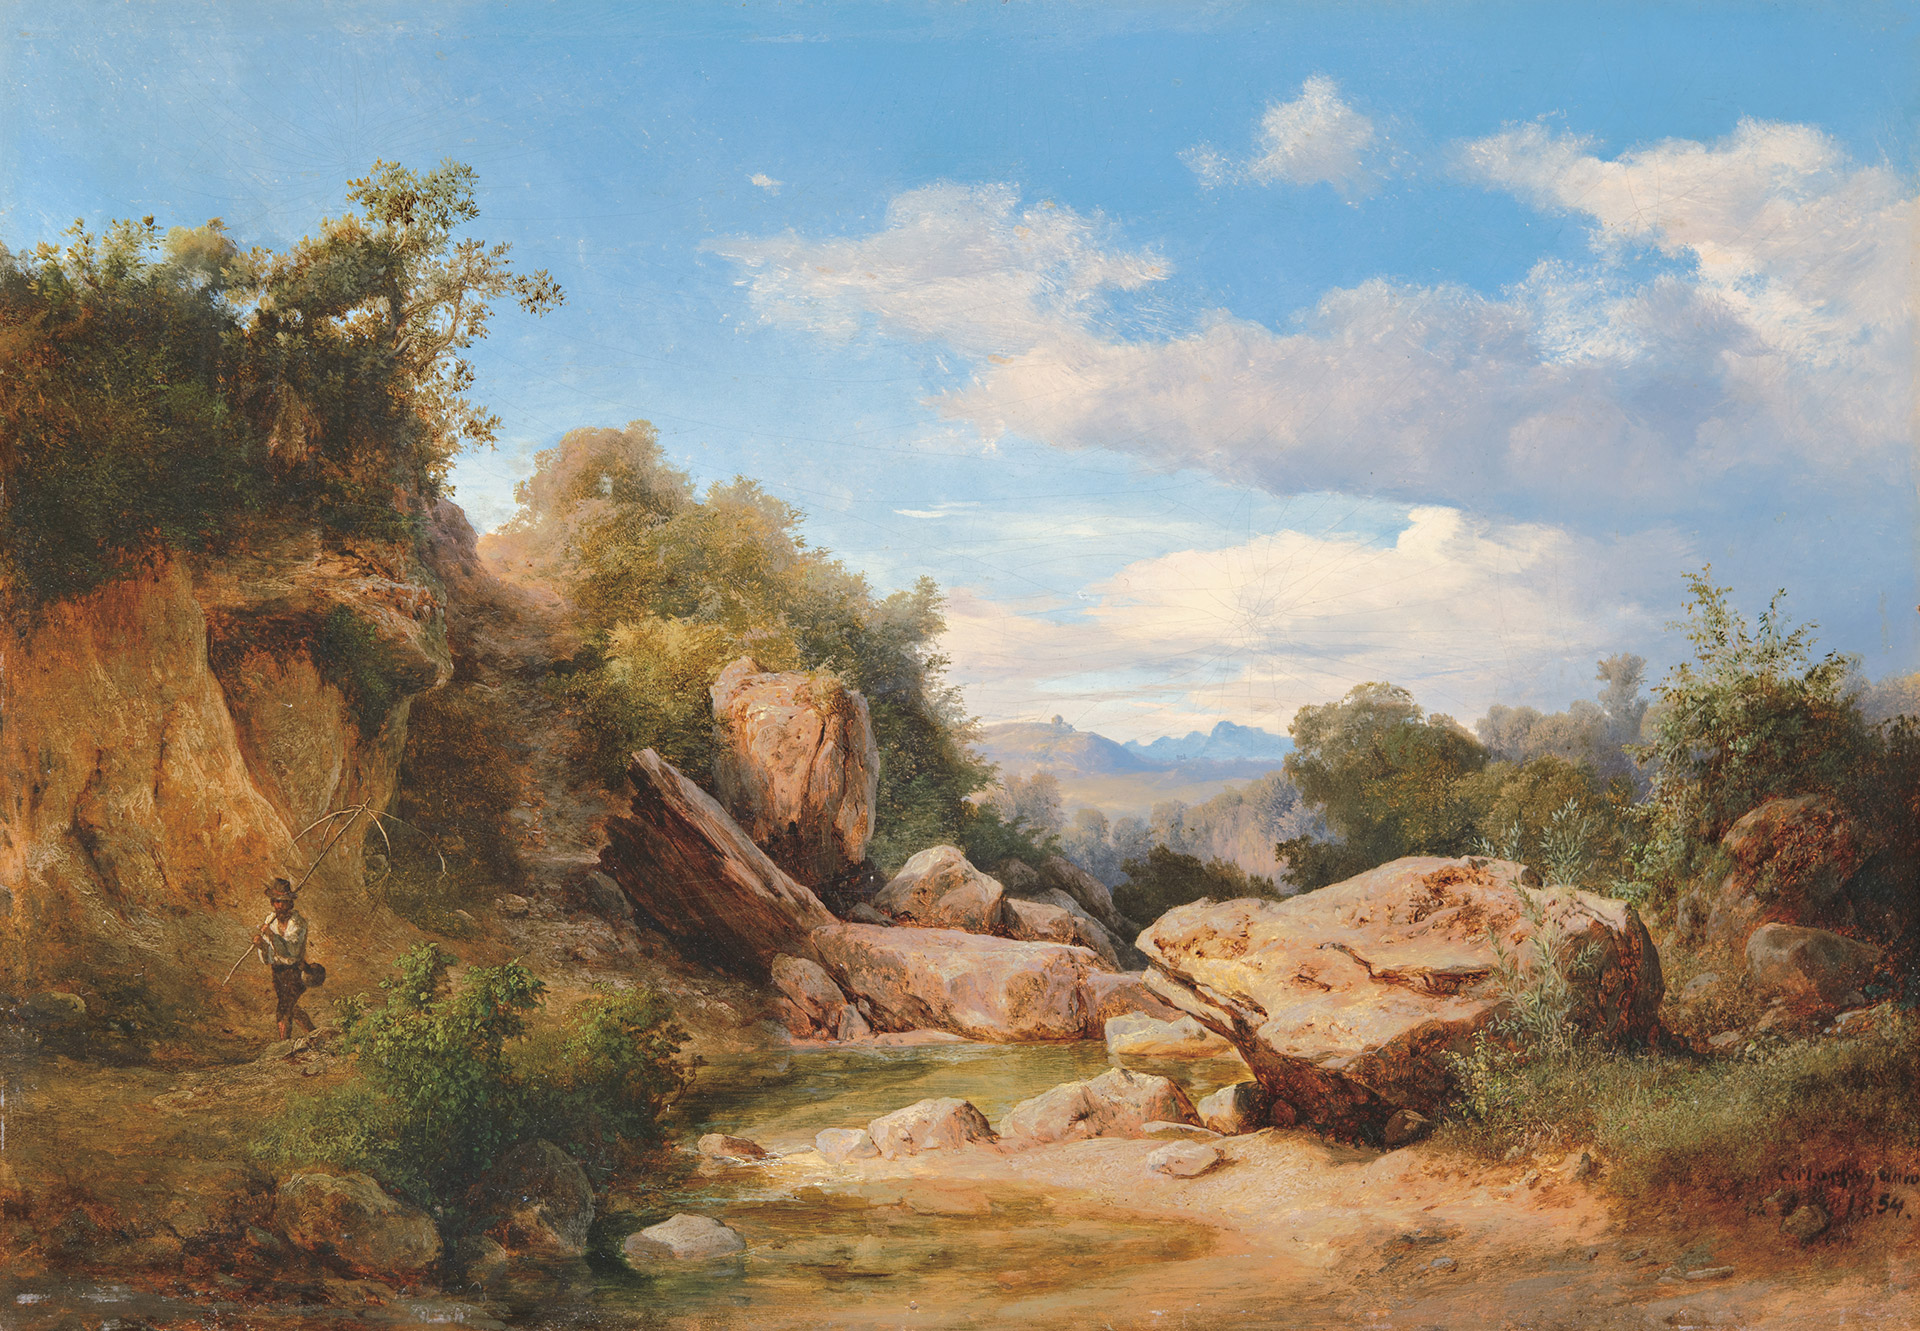 Markó Károly, Ifj. (1822 - 1891) Italian Landscape, 1854